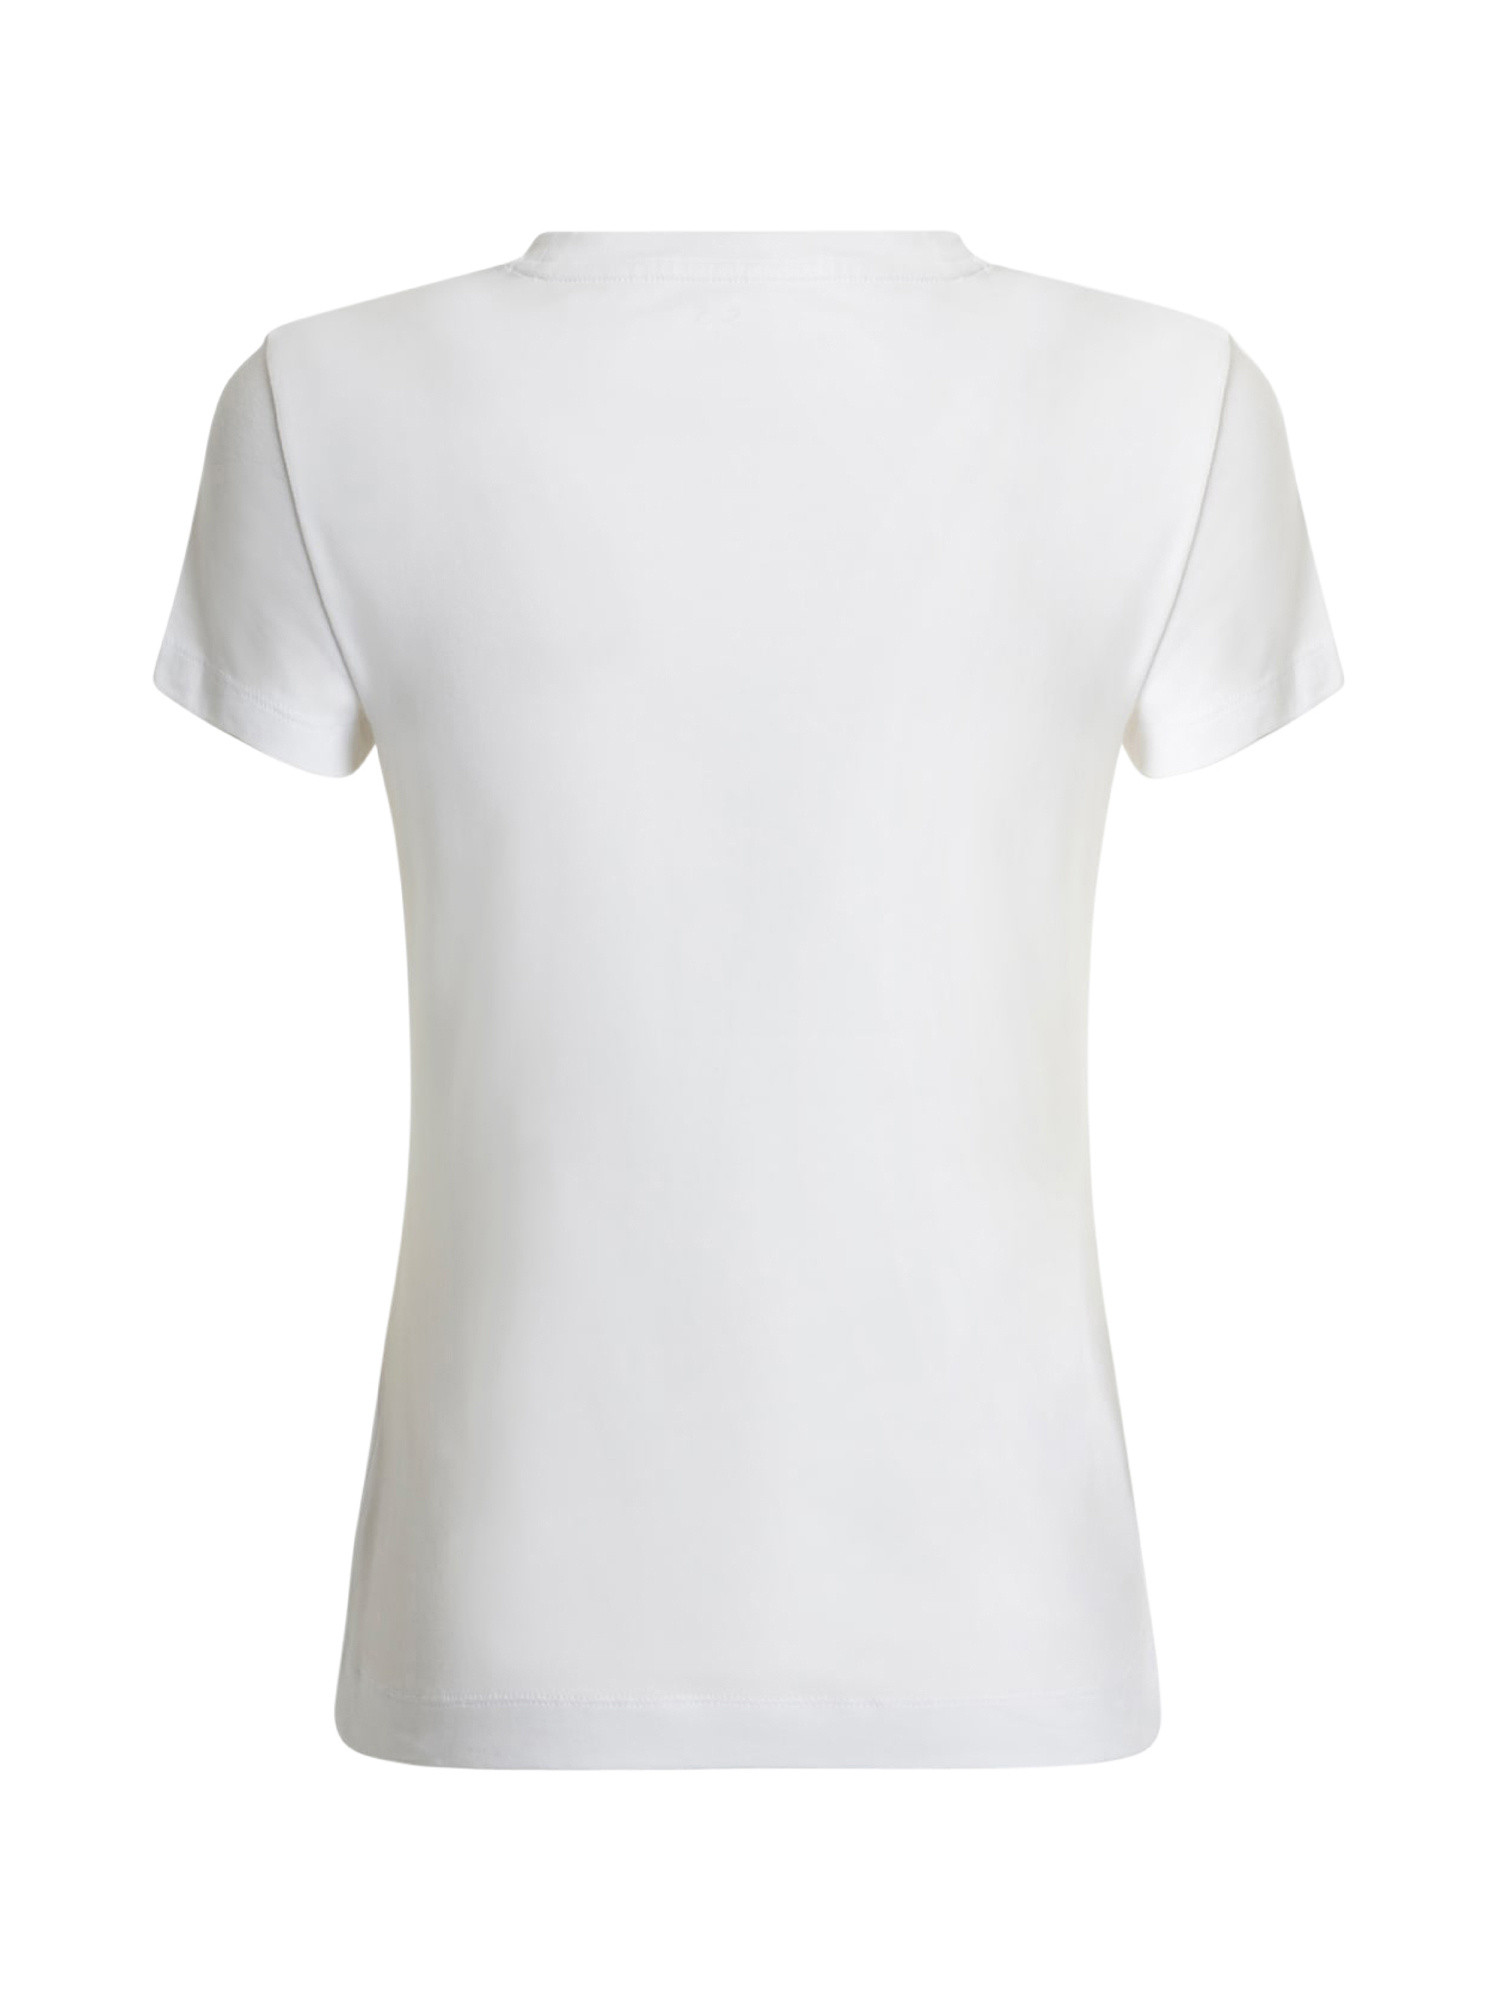 T-shirt logo frontale, Bianco, large image number 1